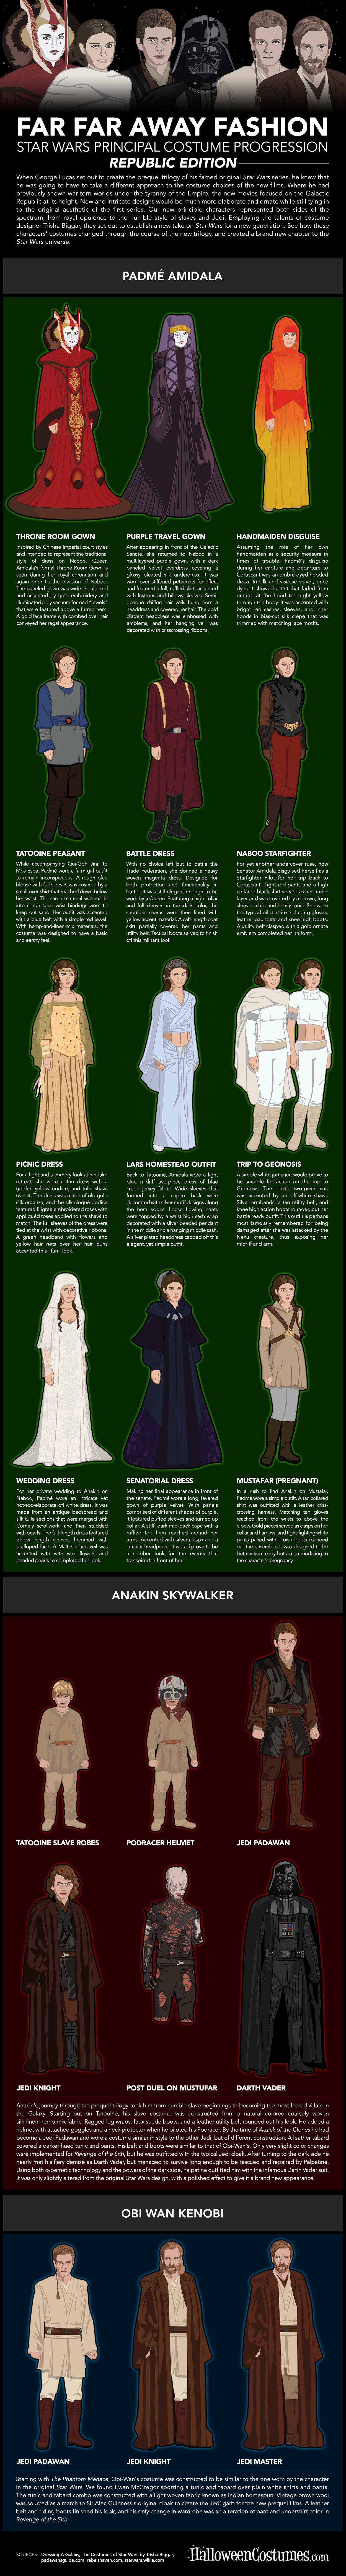 Star Wars Republic Fashion Infographic